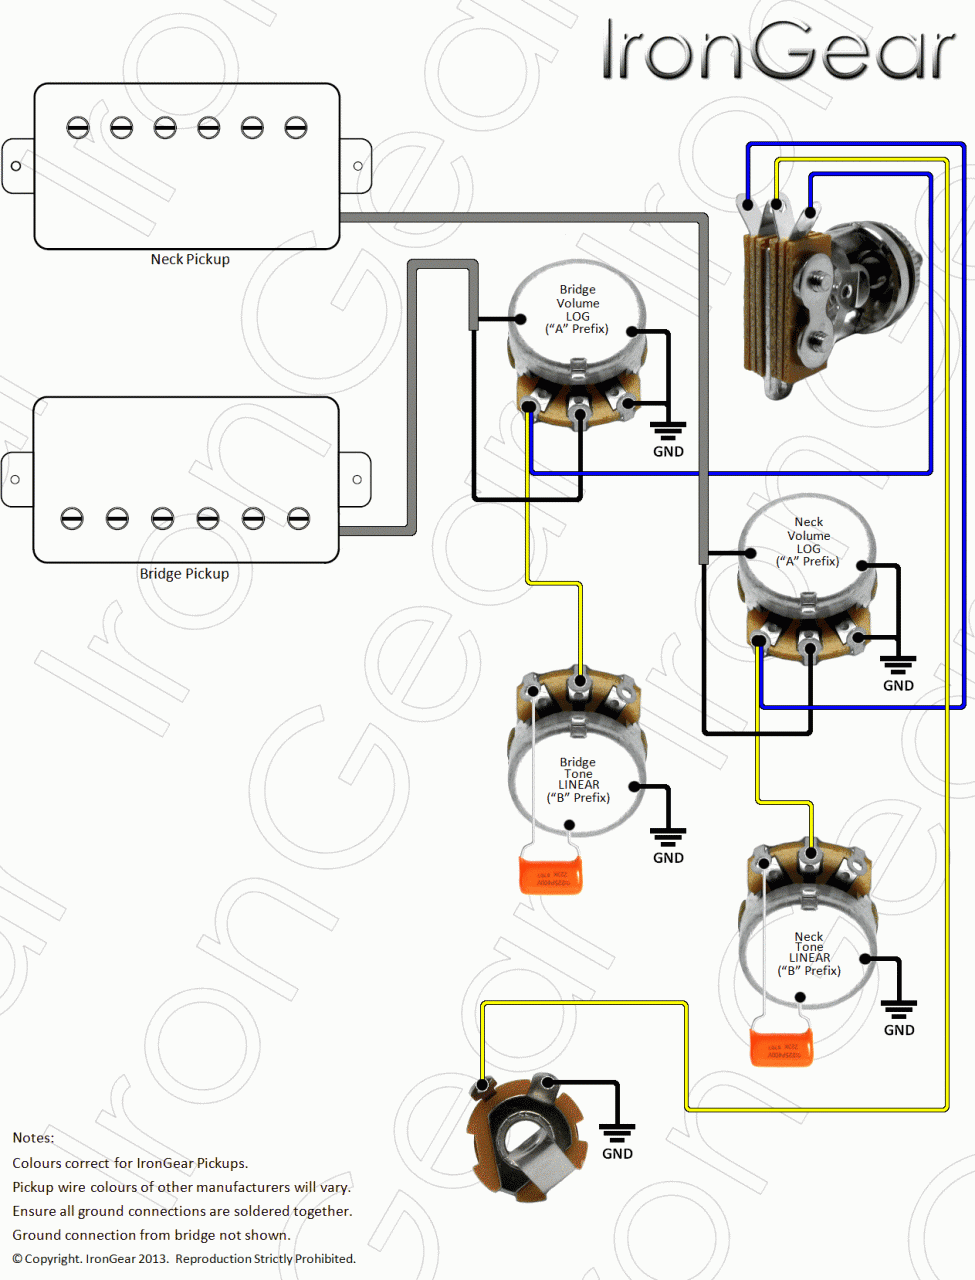 P90 Wiring Diagram 1 Volume 1 Tone